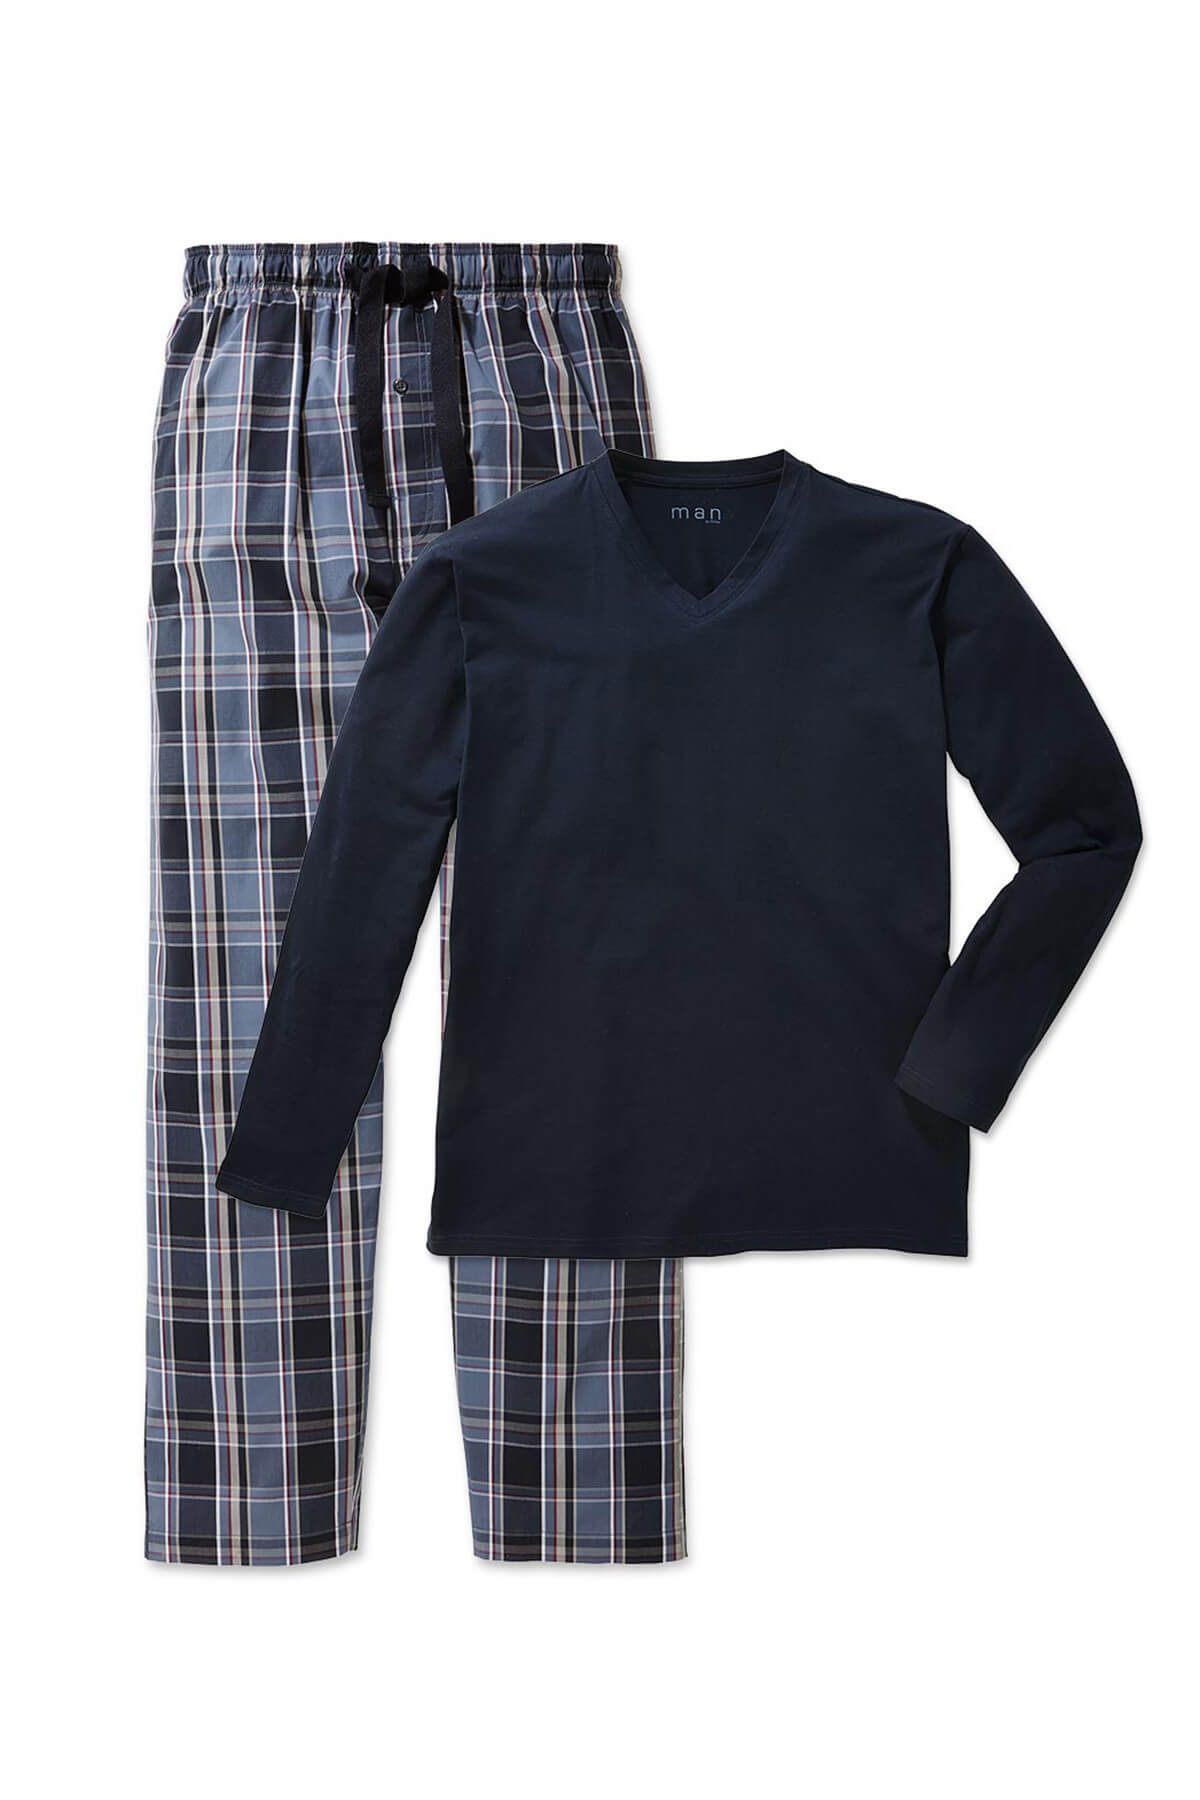 Tchibo Erkek Pijama Takımı Siyah 86559